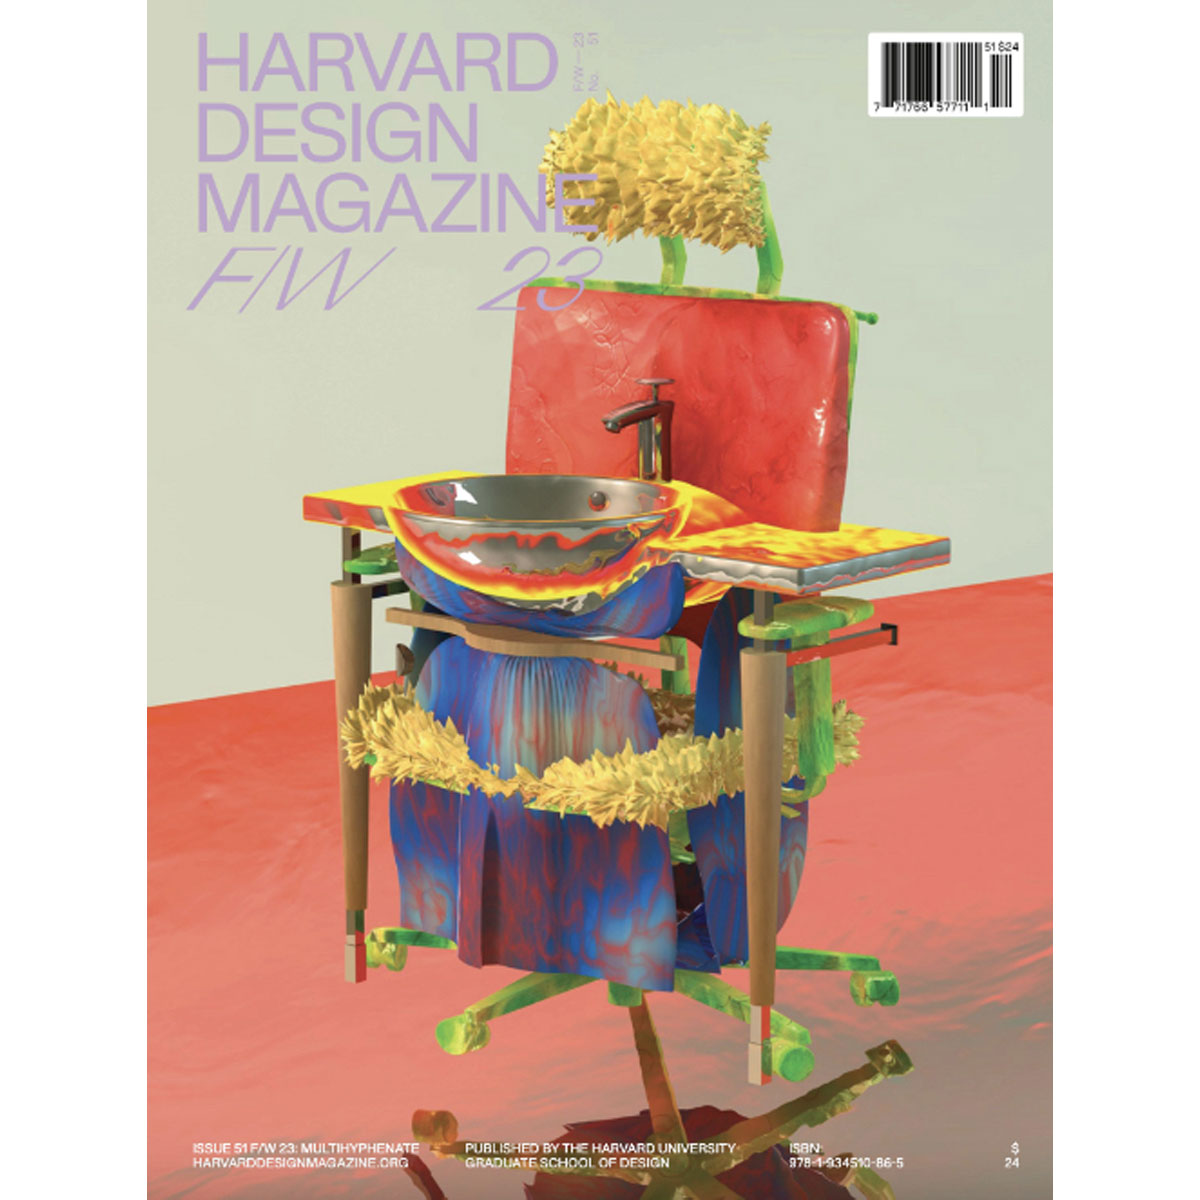 Harvard Design Magazine 51: Multihyphenate examines multihyphenation